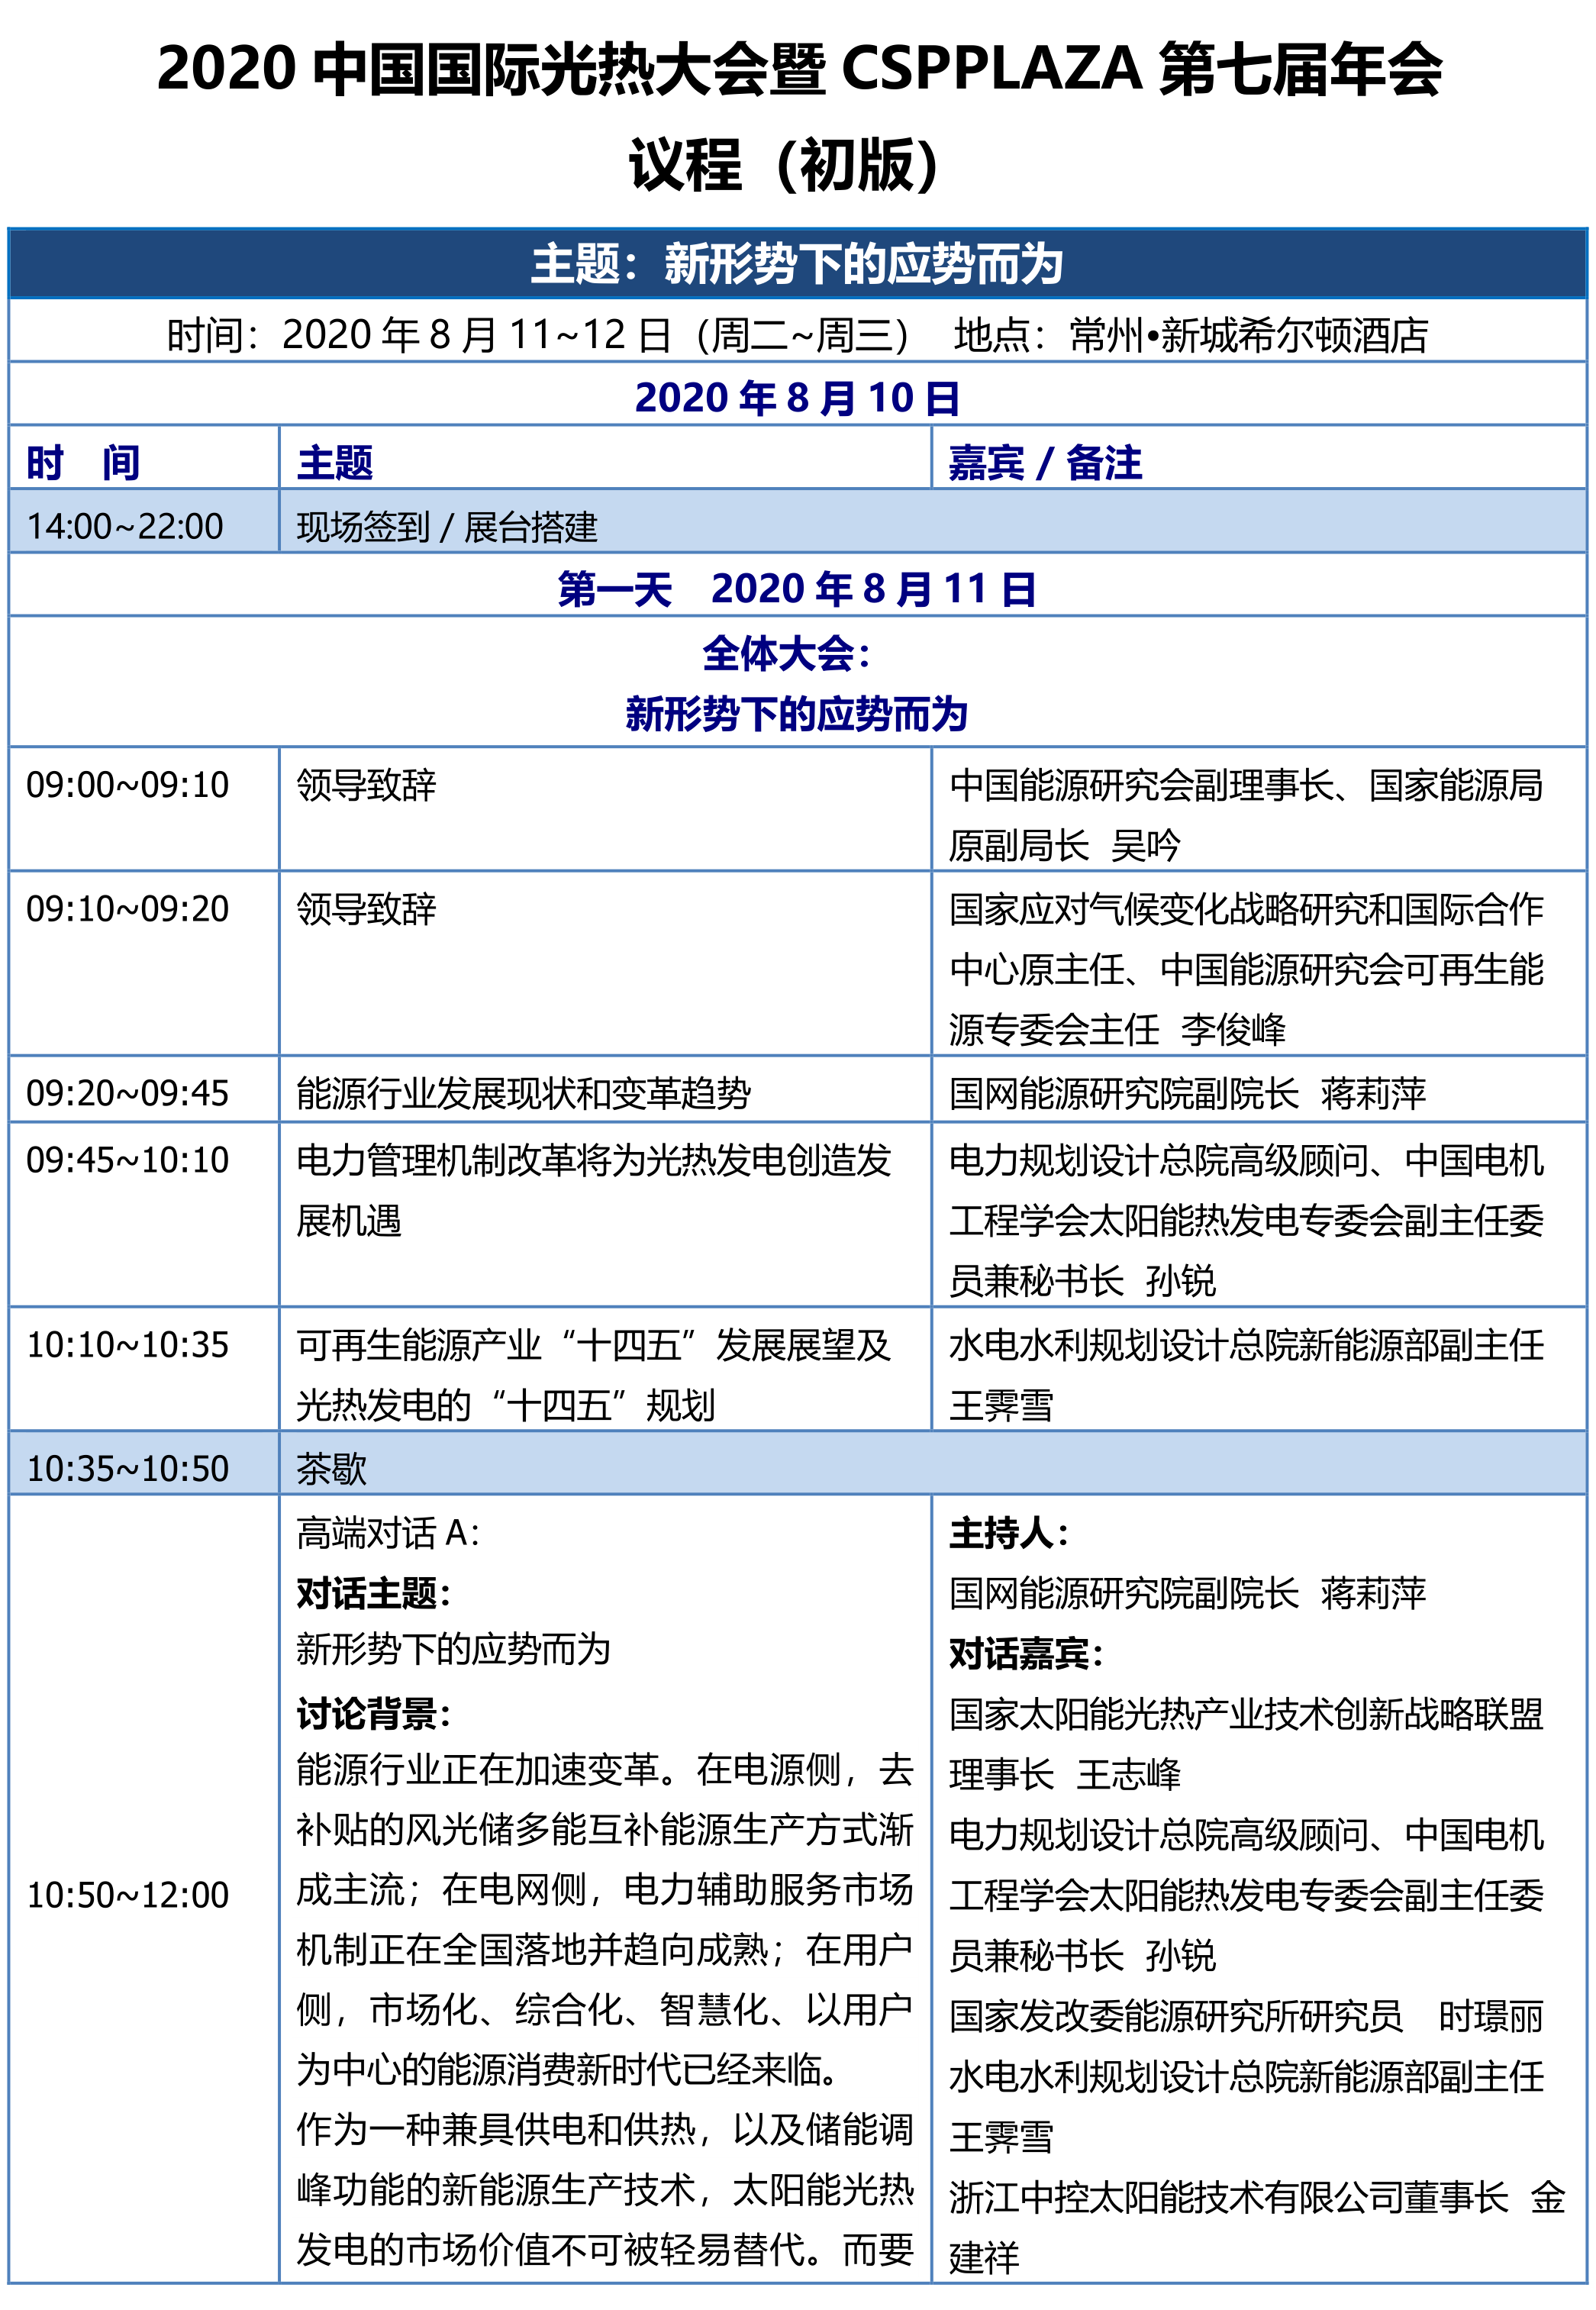 CPC2020中国国际光热大会议程-初版_1.png